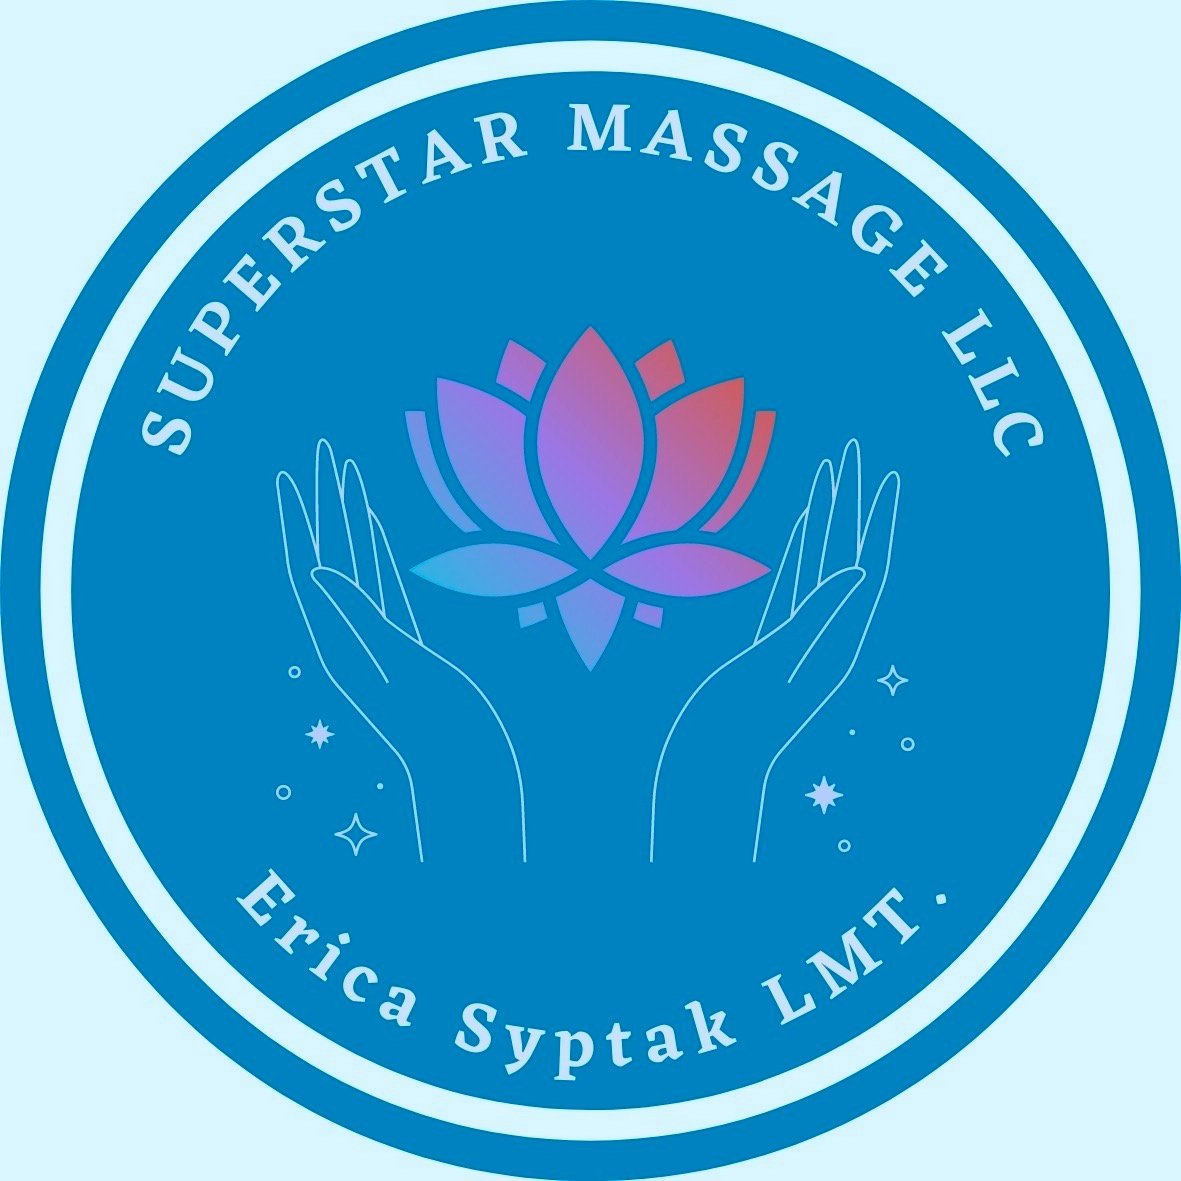 Superstar Massage LLC.